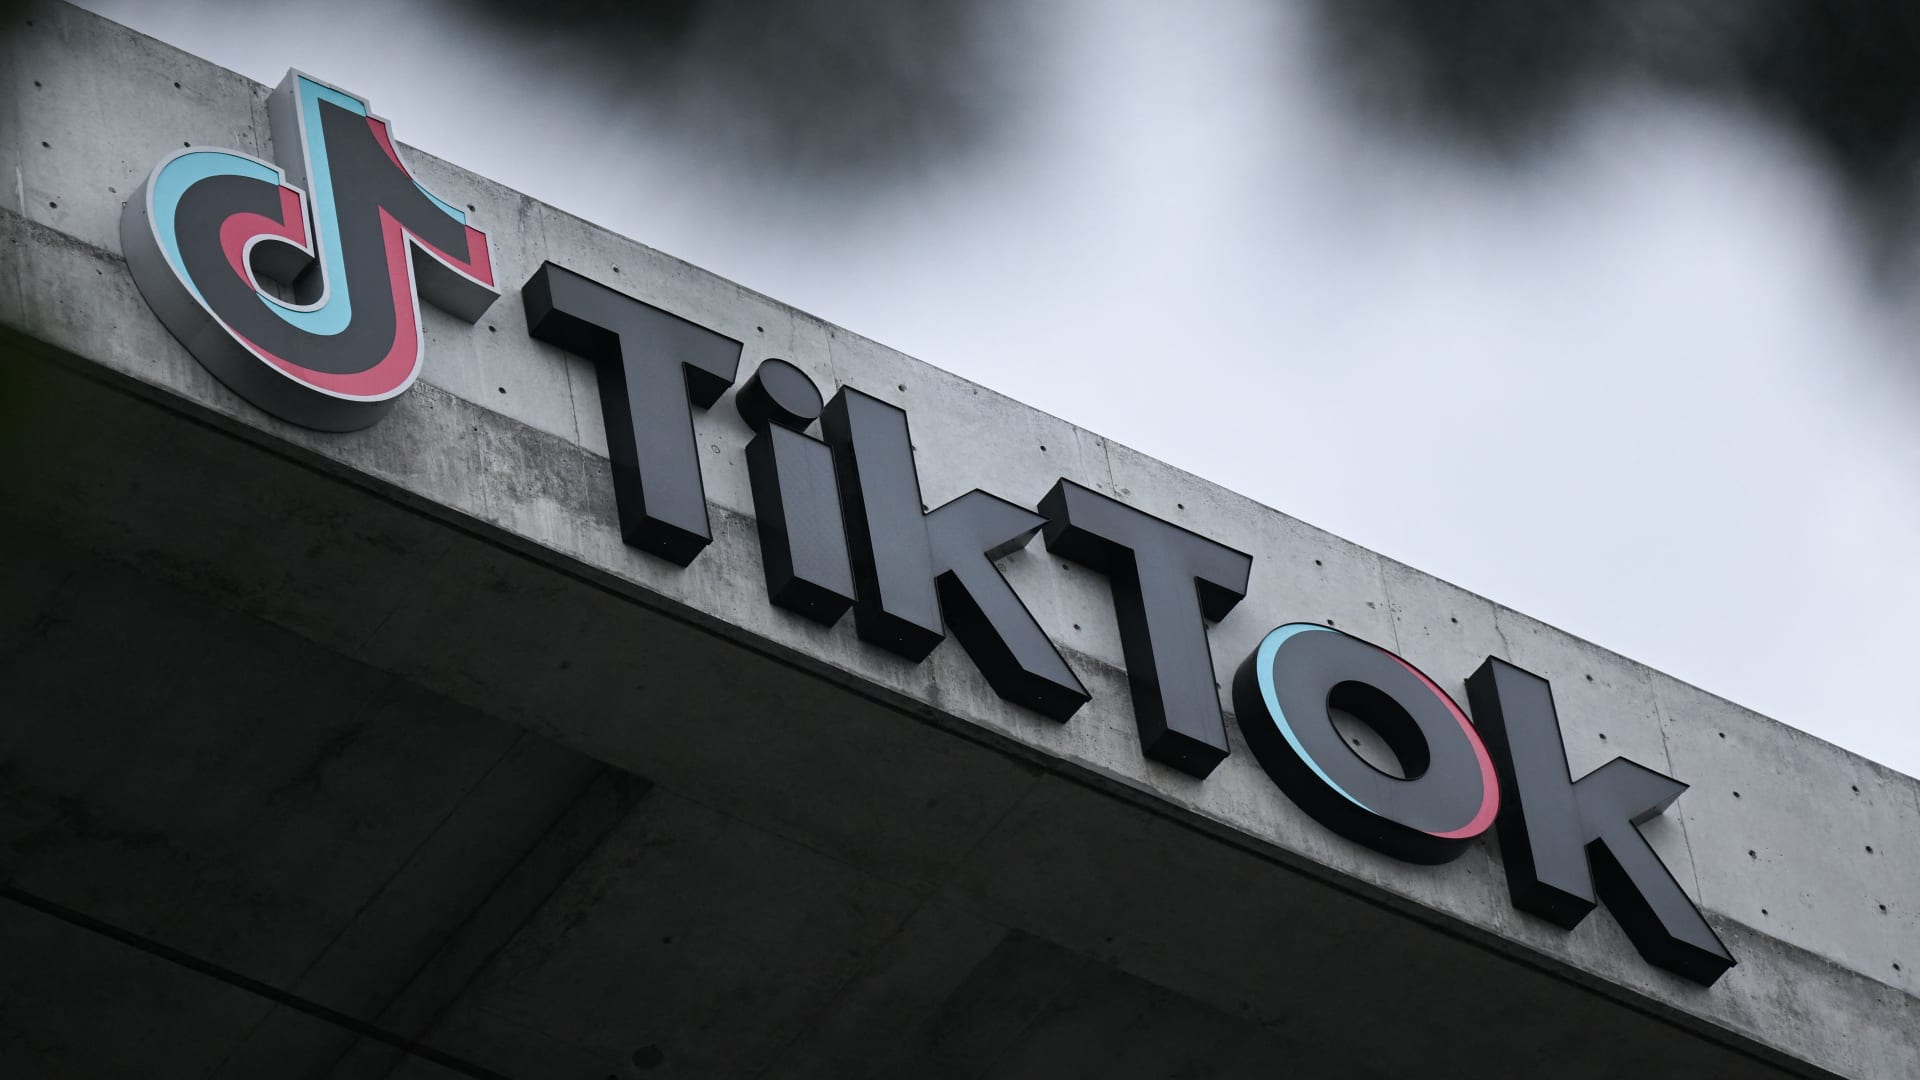 TikTok - Apps on Google Play